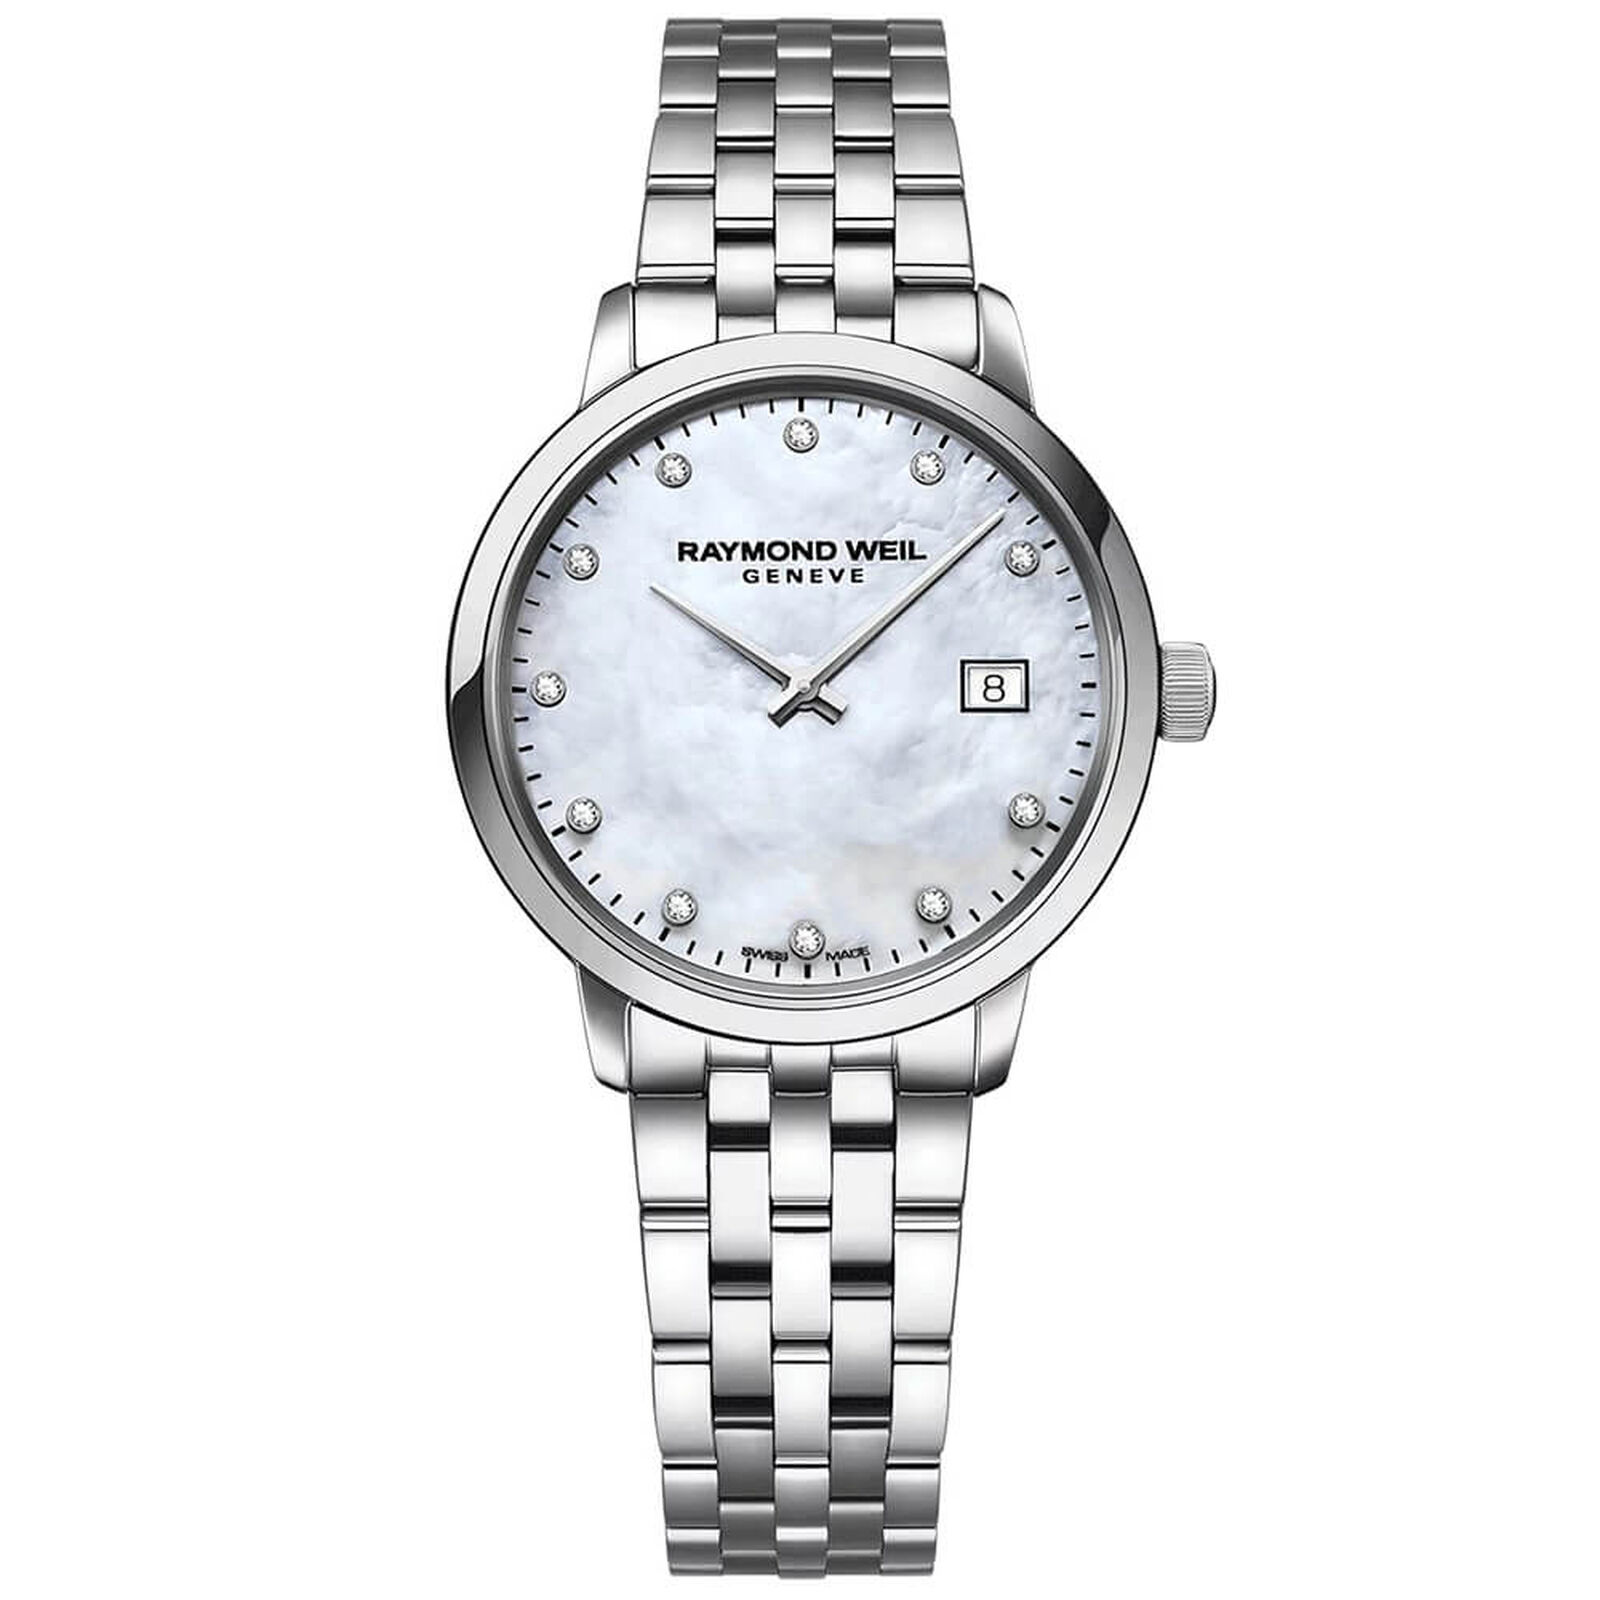 Raymond WeilToccata Ladies White Mother-of-Pearl Diamond Quartz Watch (5985-ST-97081)
29 mm, stainless steel, white mother-of-pearl dial, 11 diamonds